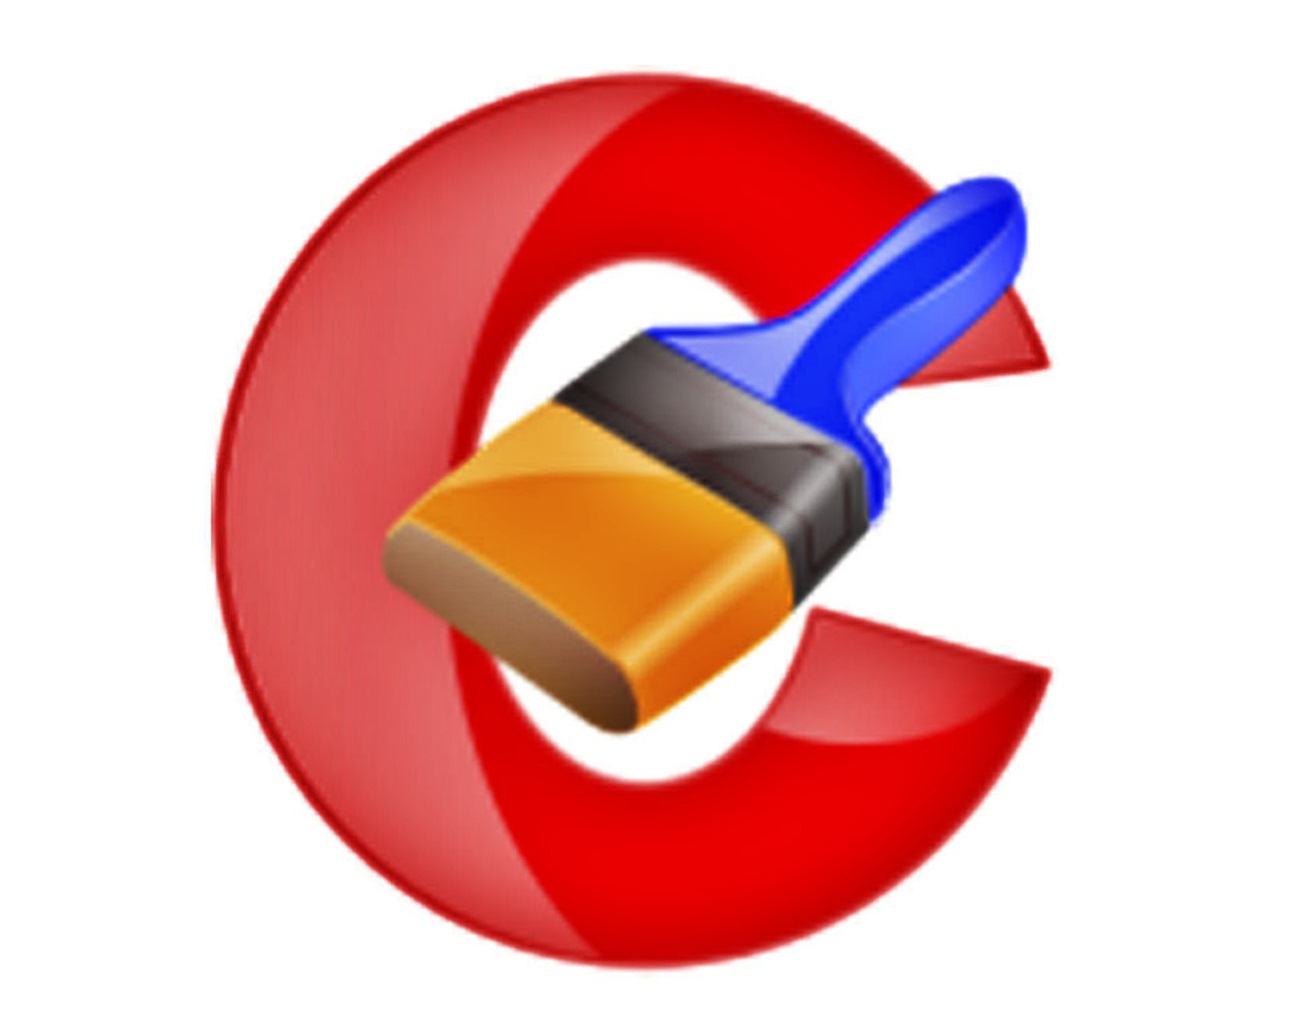 Ccleaner mac 10.5.8 free download windows 7